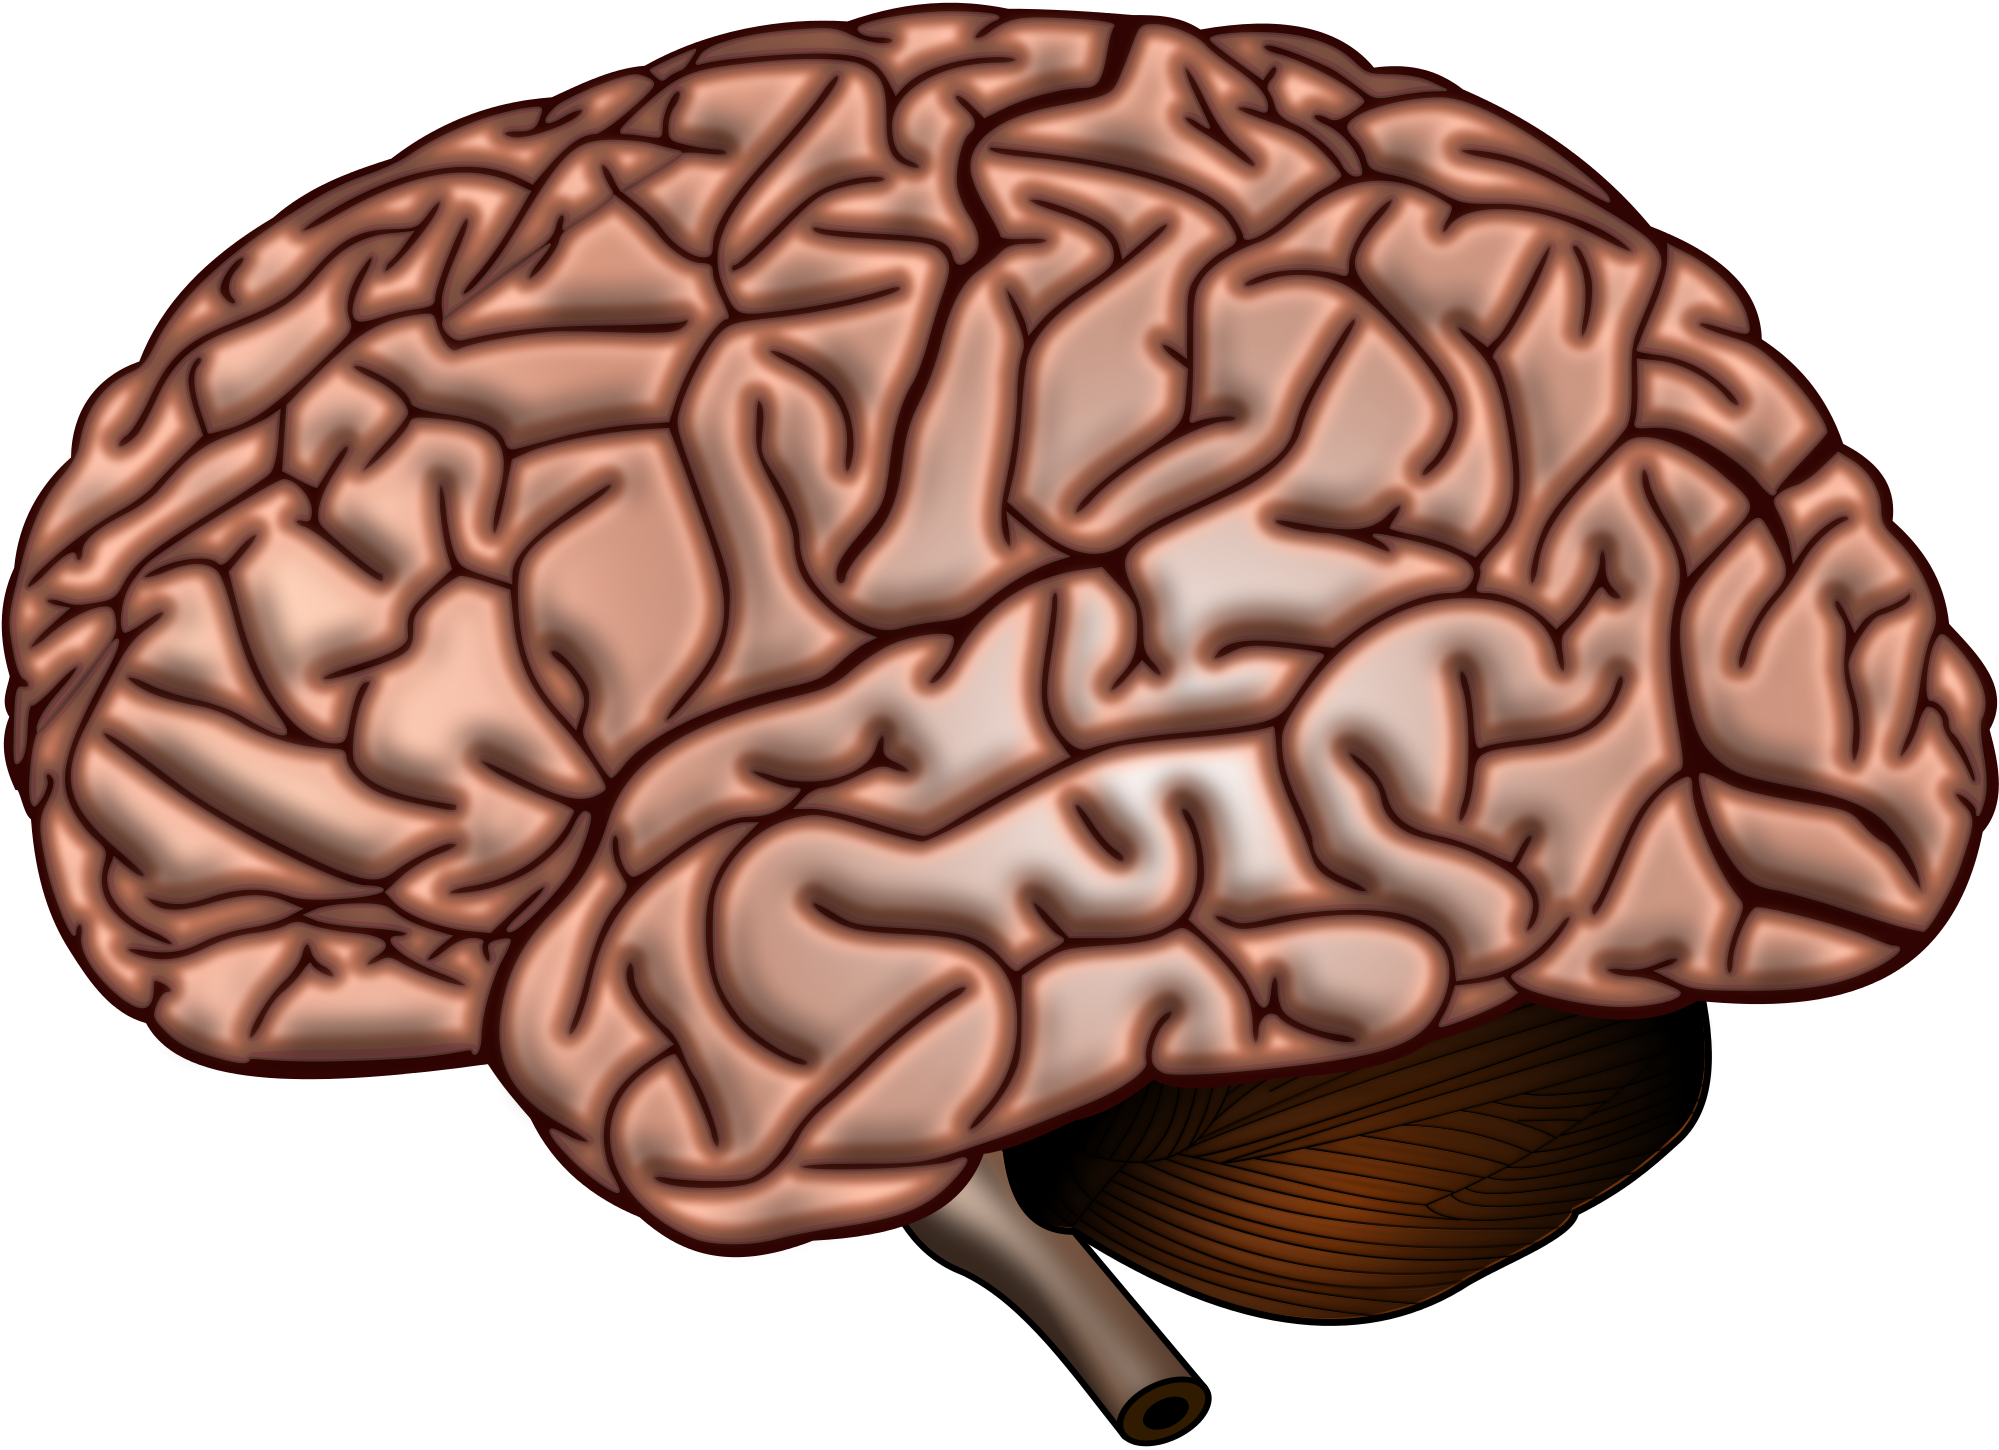 Brain download. Мозг без фона. Мозг анатомия.